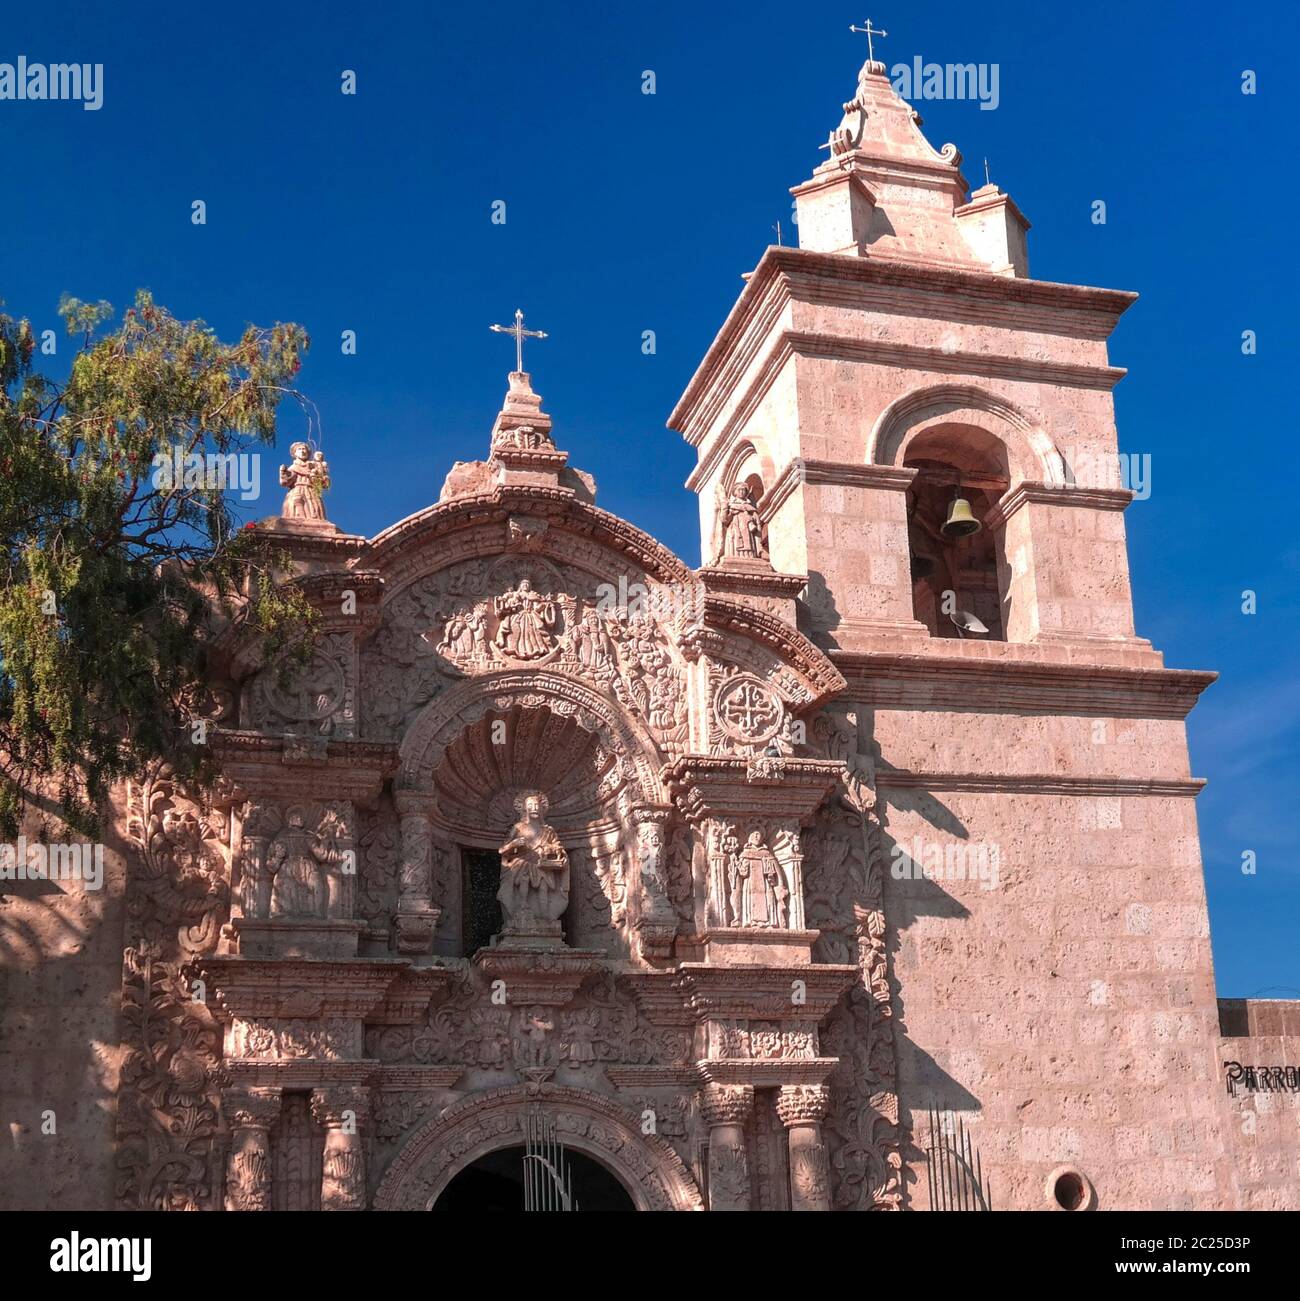 Exterior ciew to facade of Iglesia de San Juan Bautista de Yanahuara, Arequipa, Peru Stock Photo